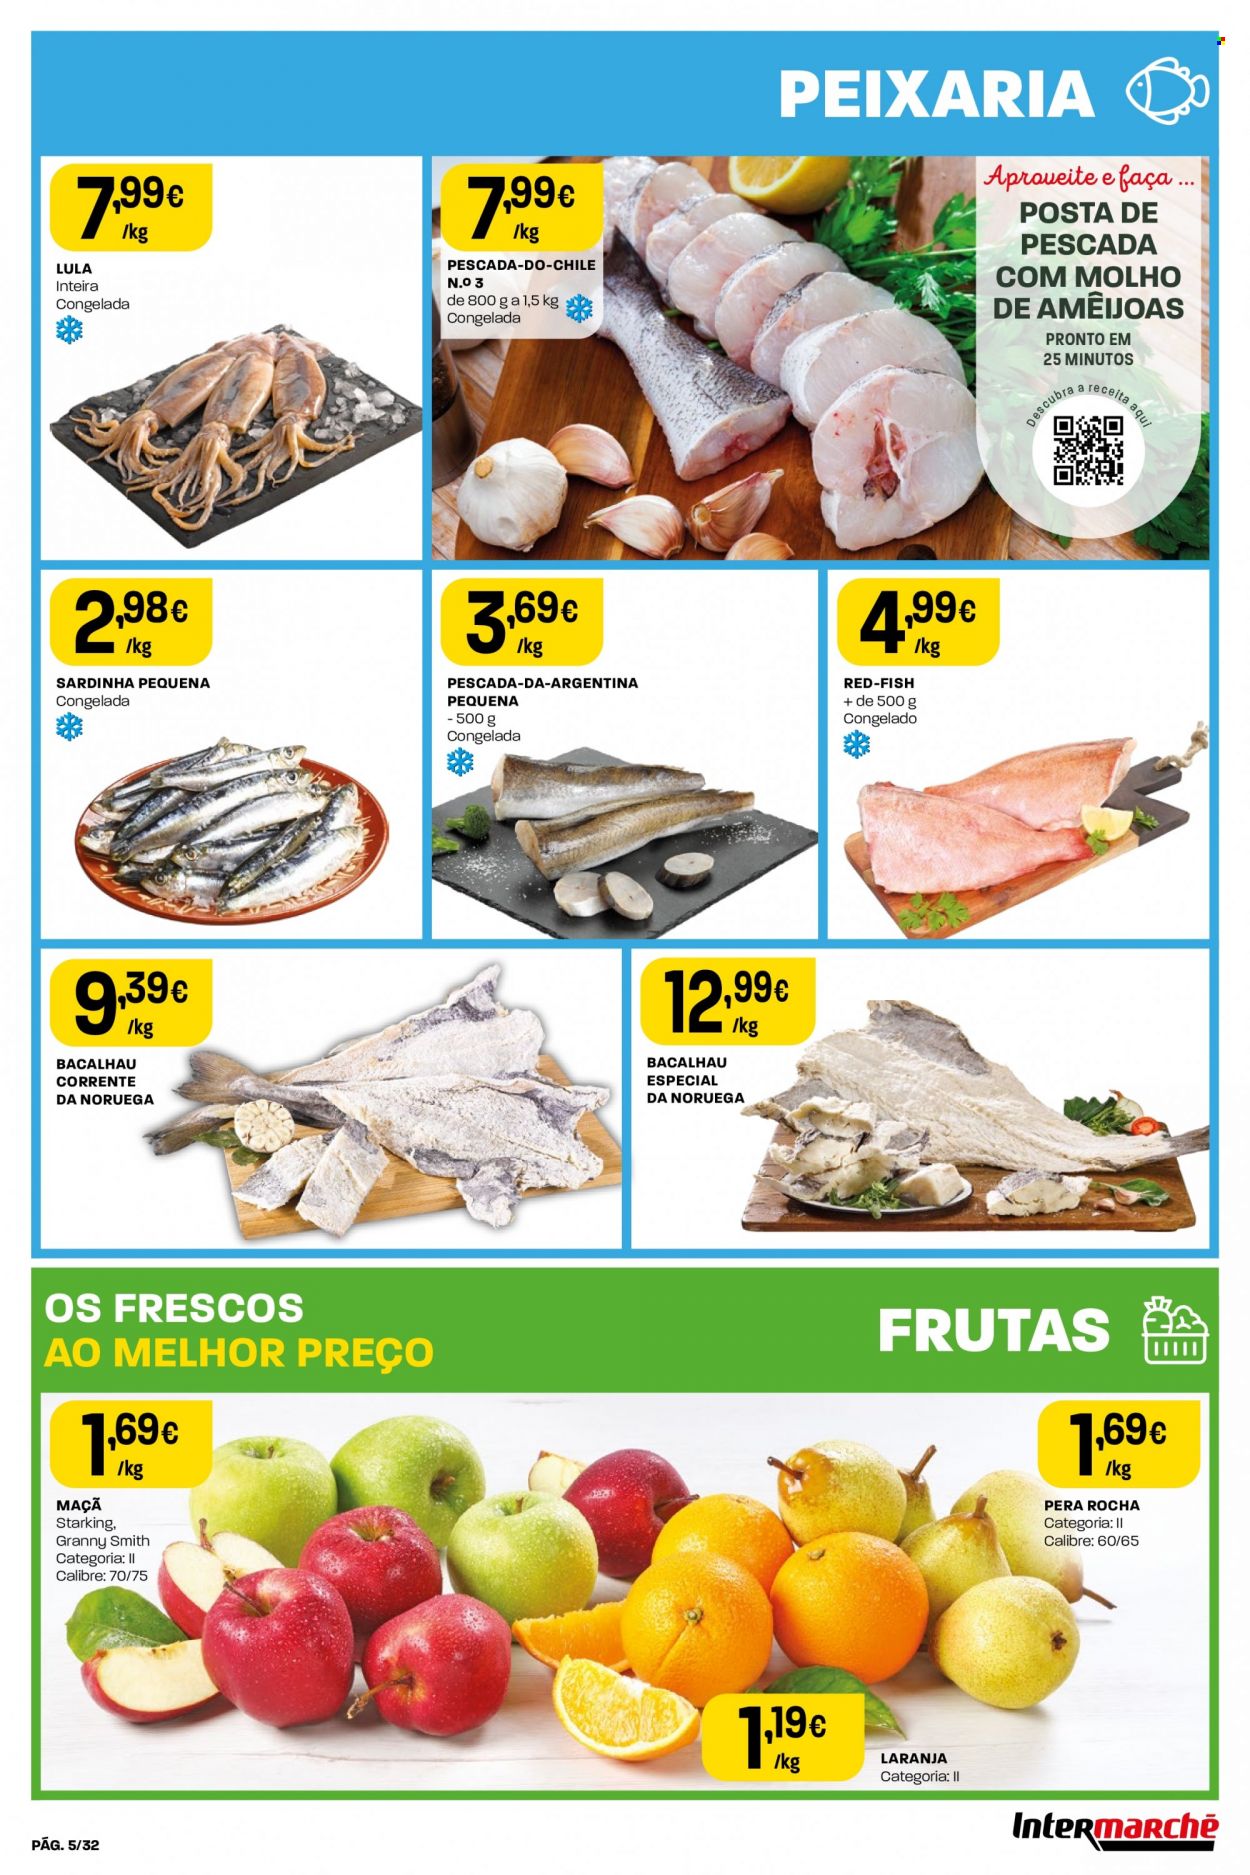 thumbnail - Folheto Intermarché - 30.3.2023 - 5.4.2023 - Produtos em promoção - maçã, pera, laranja, lula, filetes de peixe, amêijoa, sardinhas, bacalhau, peixe. Página 5.